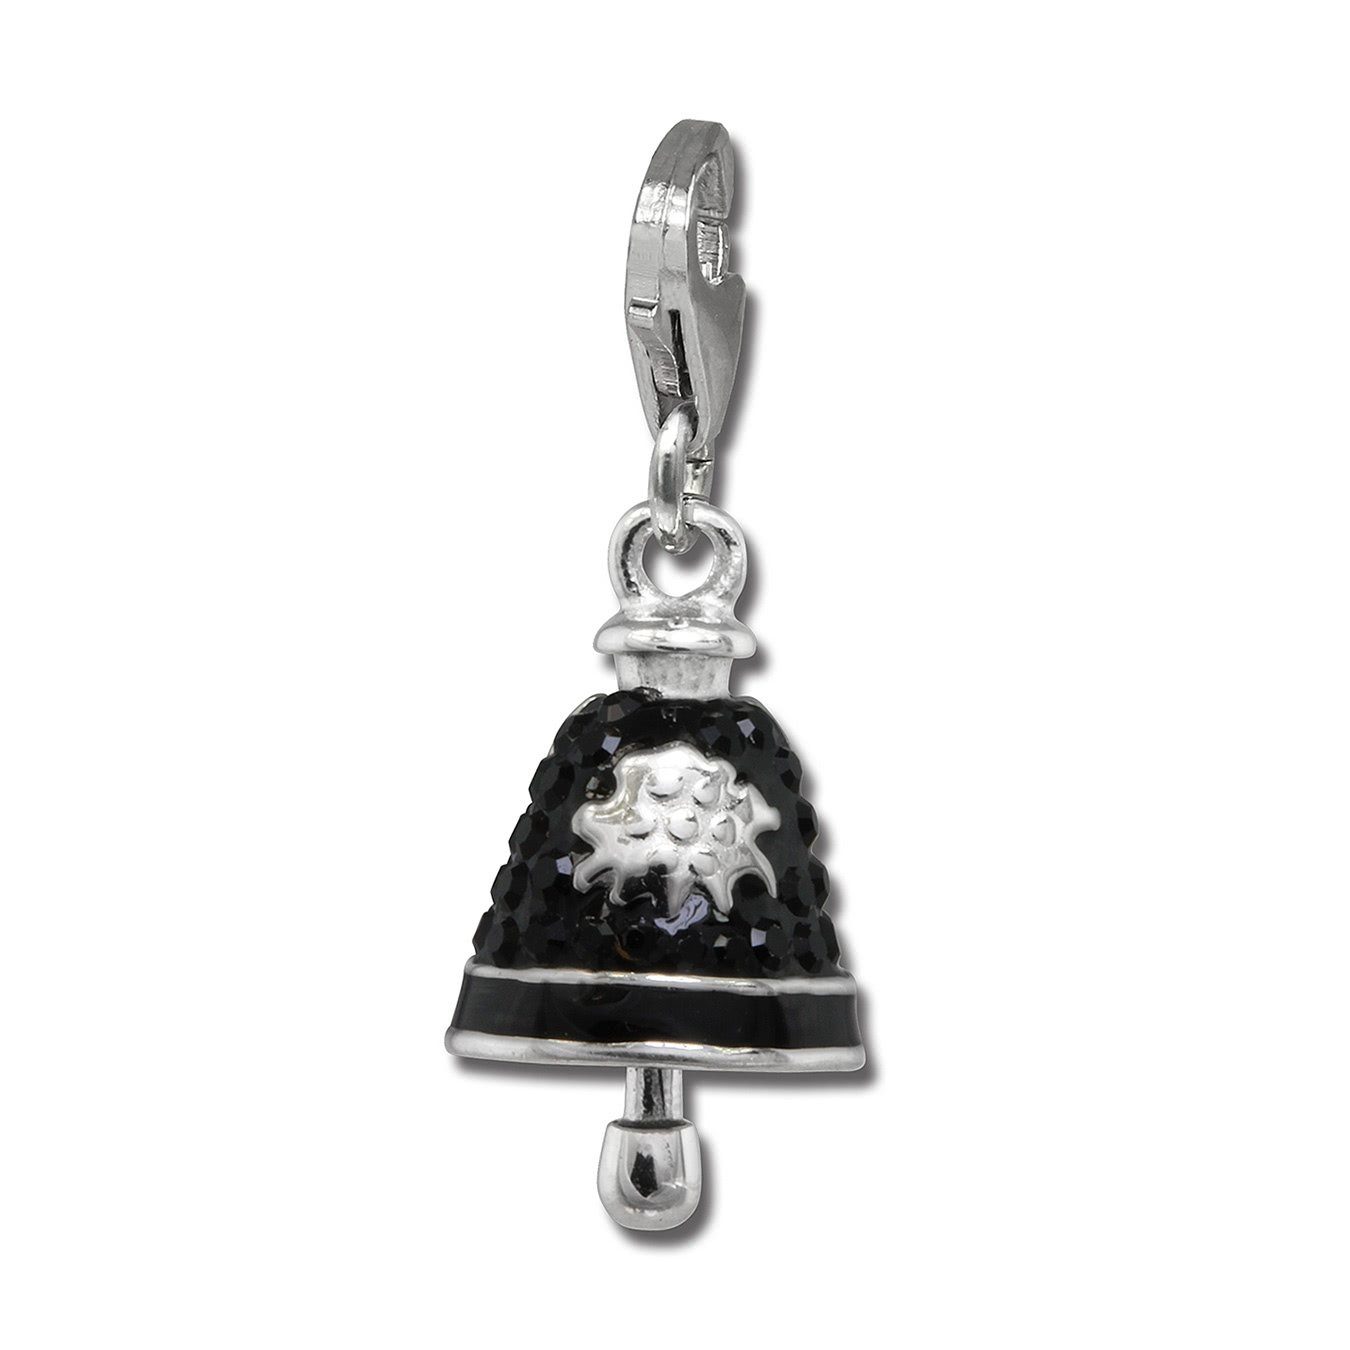 Sterling Charmsanhänger Farbe: schwarz SilberDream Charm 925 Silber, Charm-Einhänger schwarz SilberDream Glocke, Zirkonia, Glocke